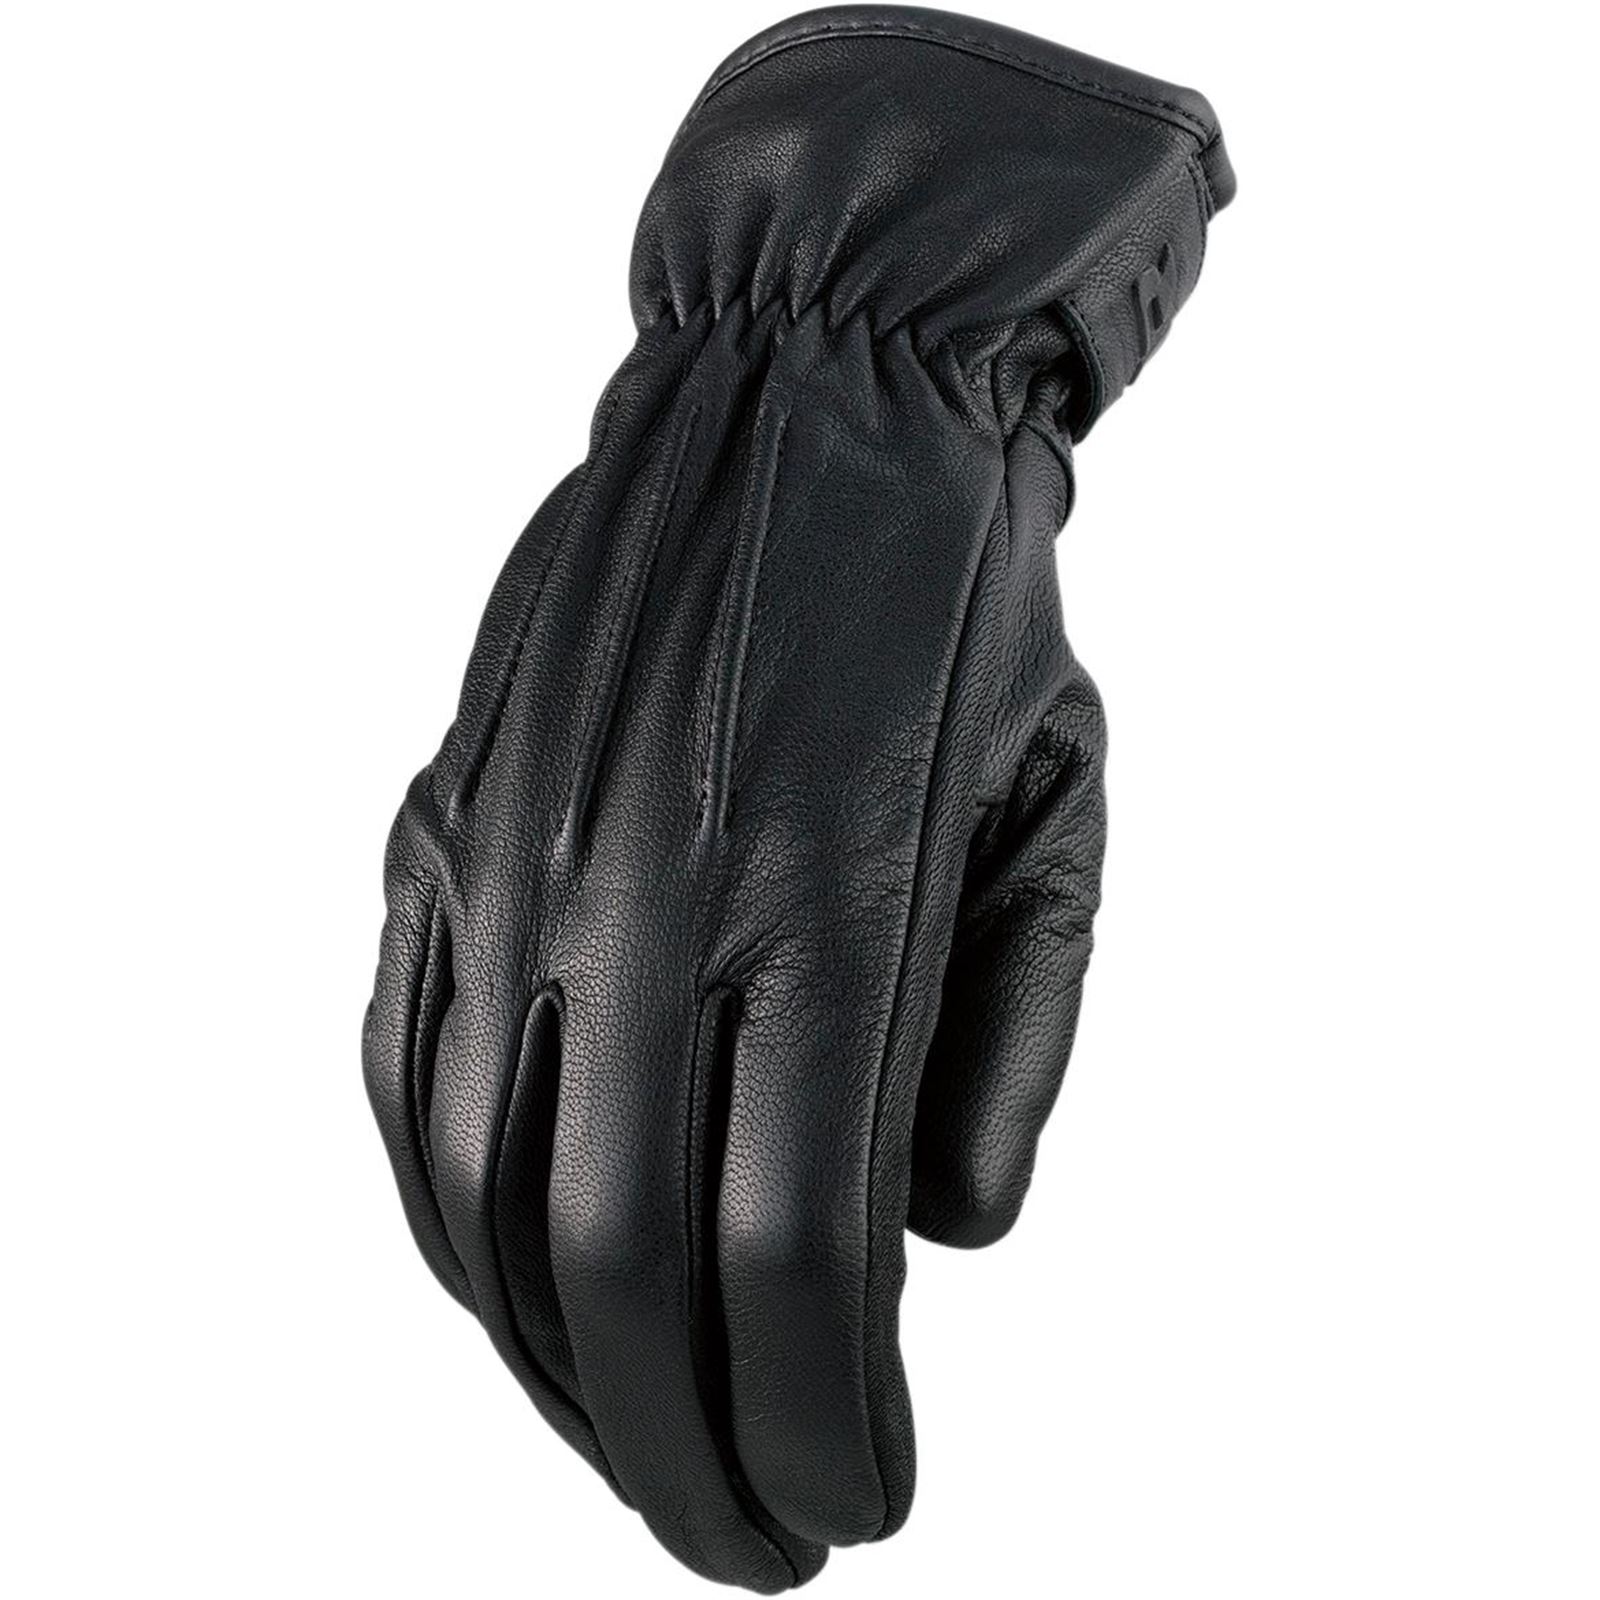 Z1R Reaper 2 Gloves - Black - Medium